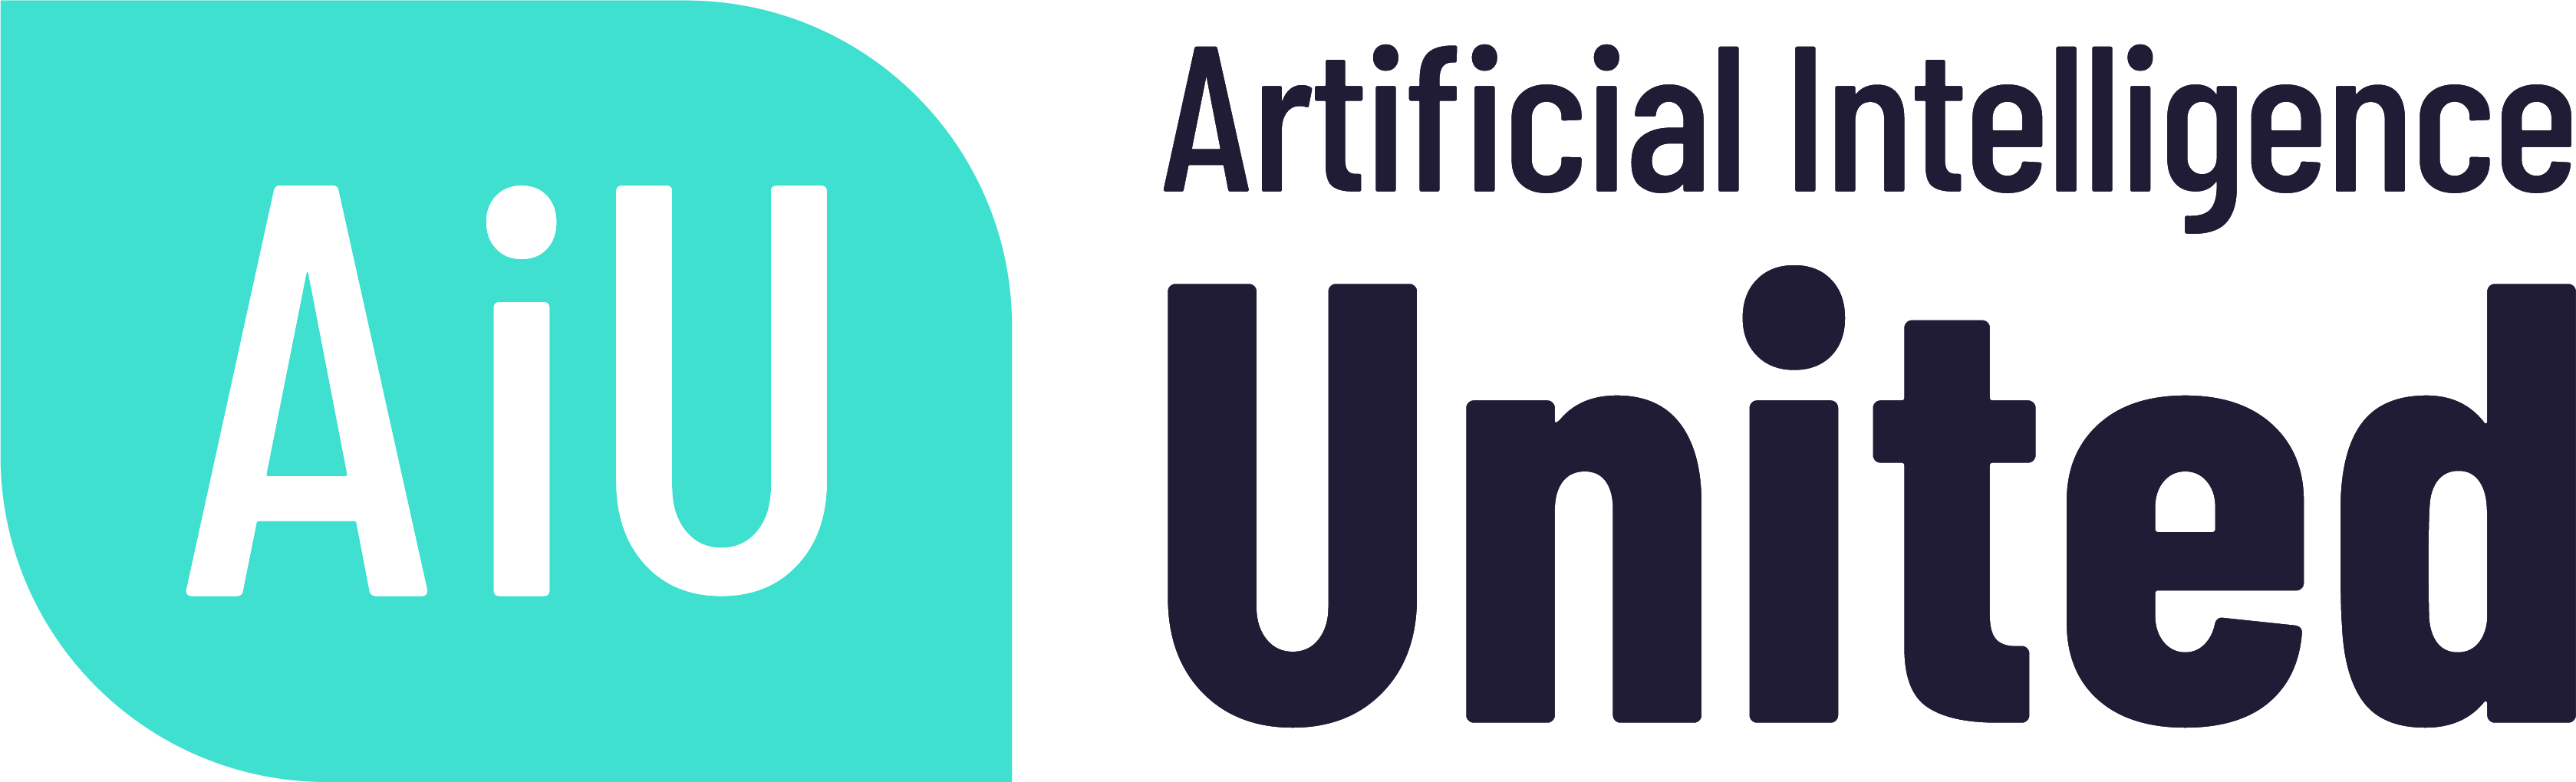 Artificial Intelligence United (AiU)